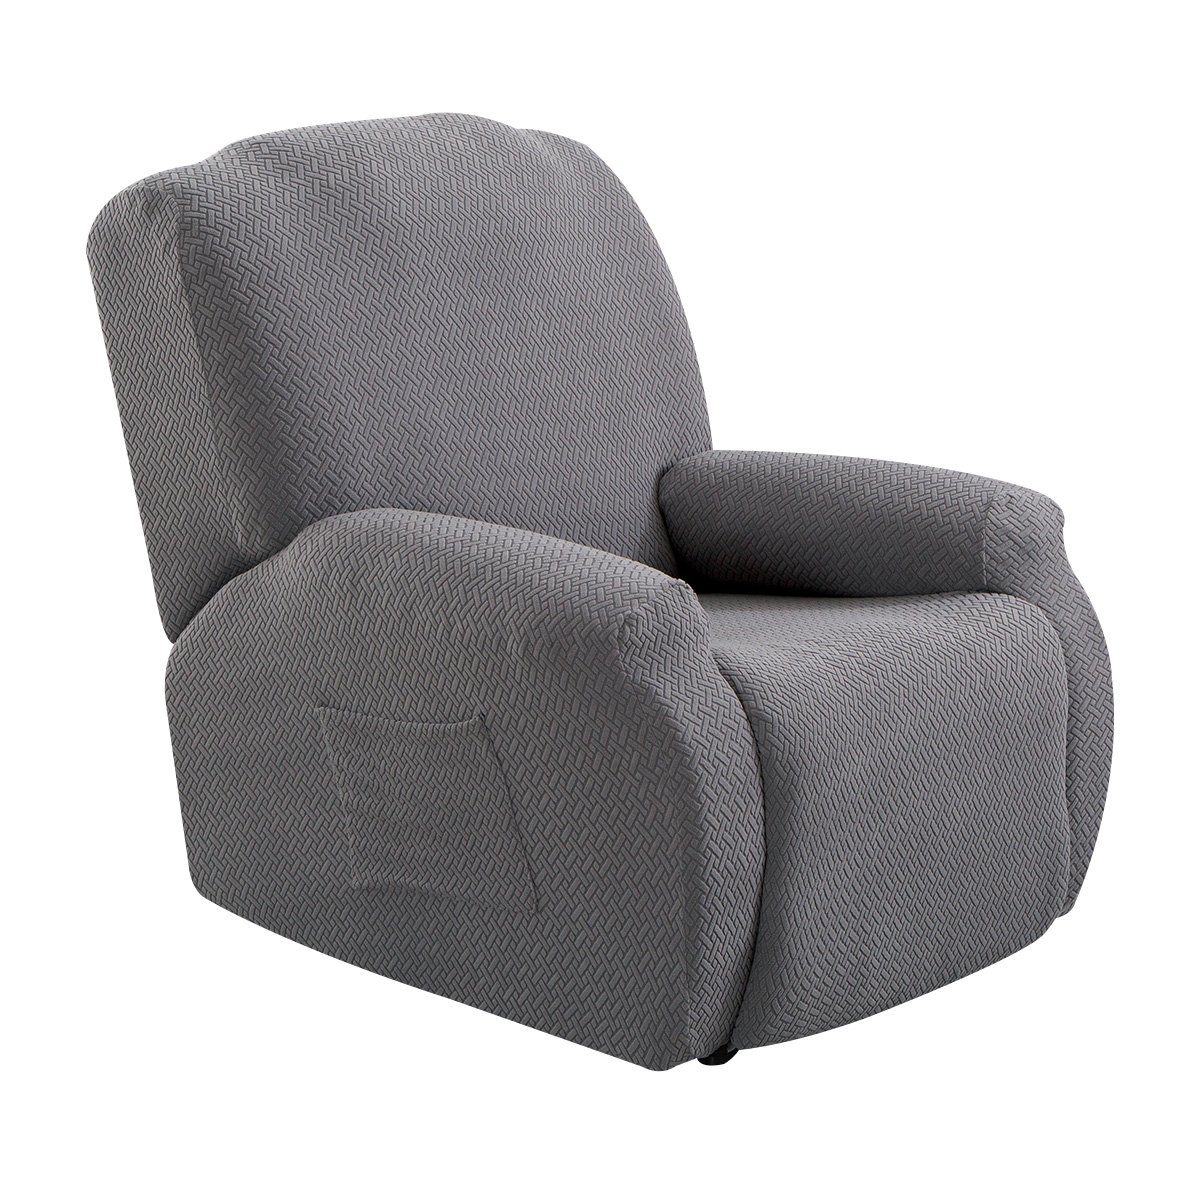 Rosnek, mit Sesselbezug für Sessel, Strukturoptik Komplett Relaxsessel Stretchhusse, Liege Sesselhusse